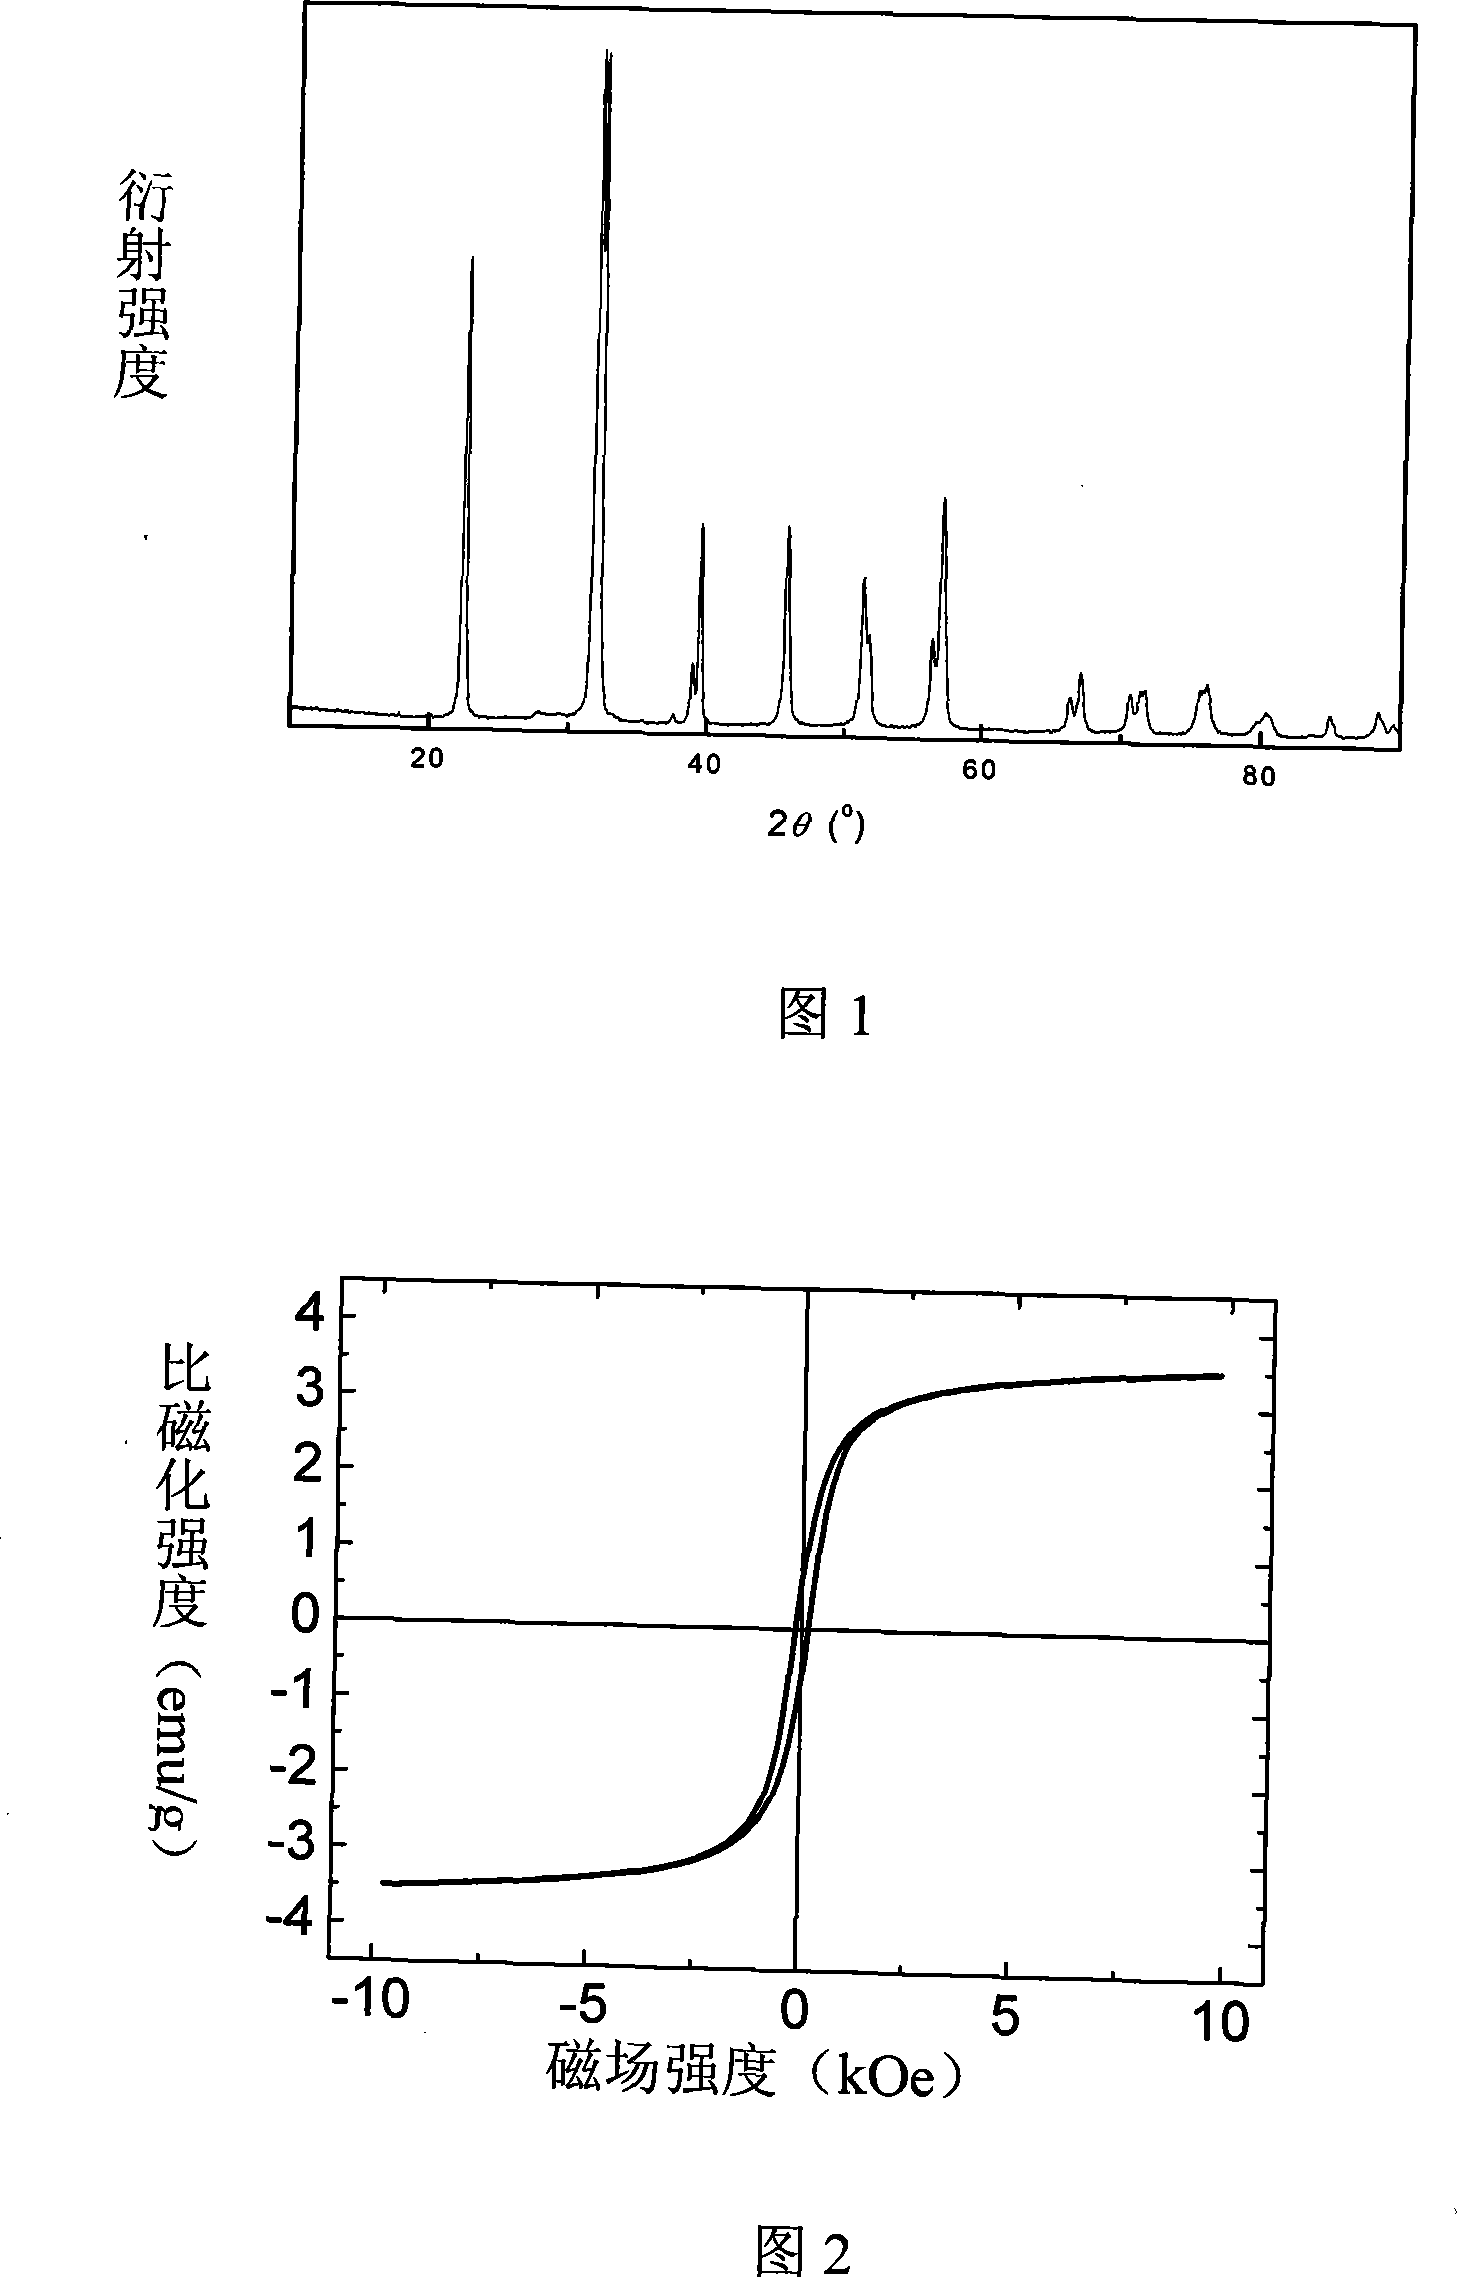 Method for preparing (100) preferred orientation bismuth ferrite thin film